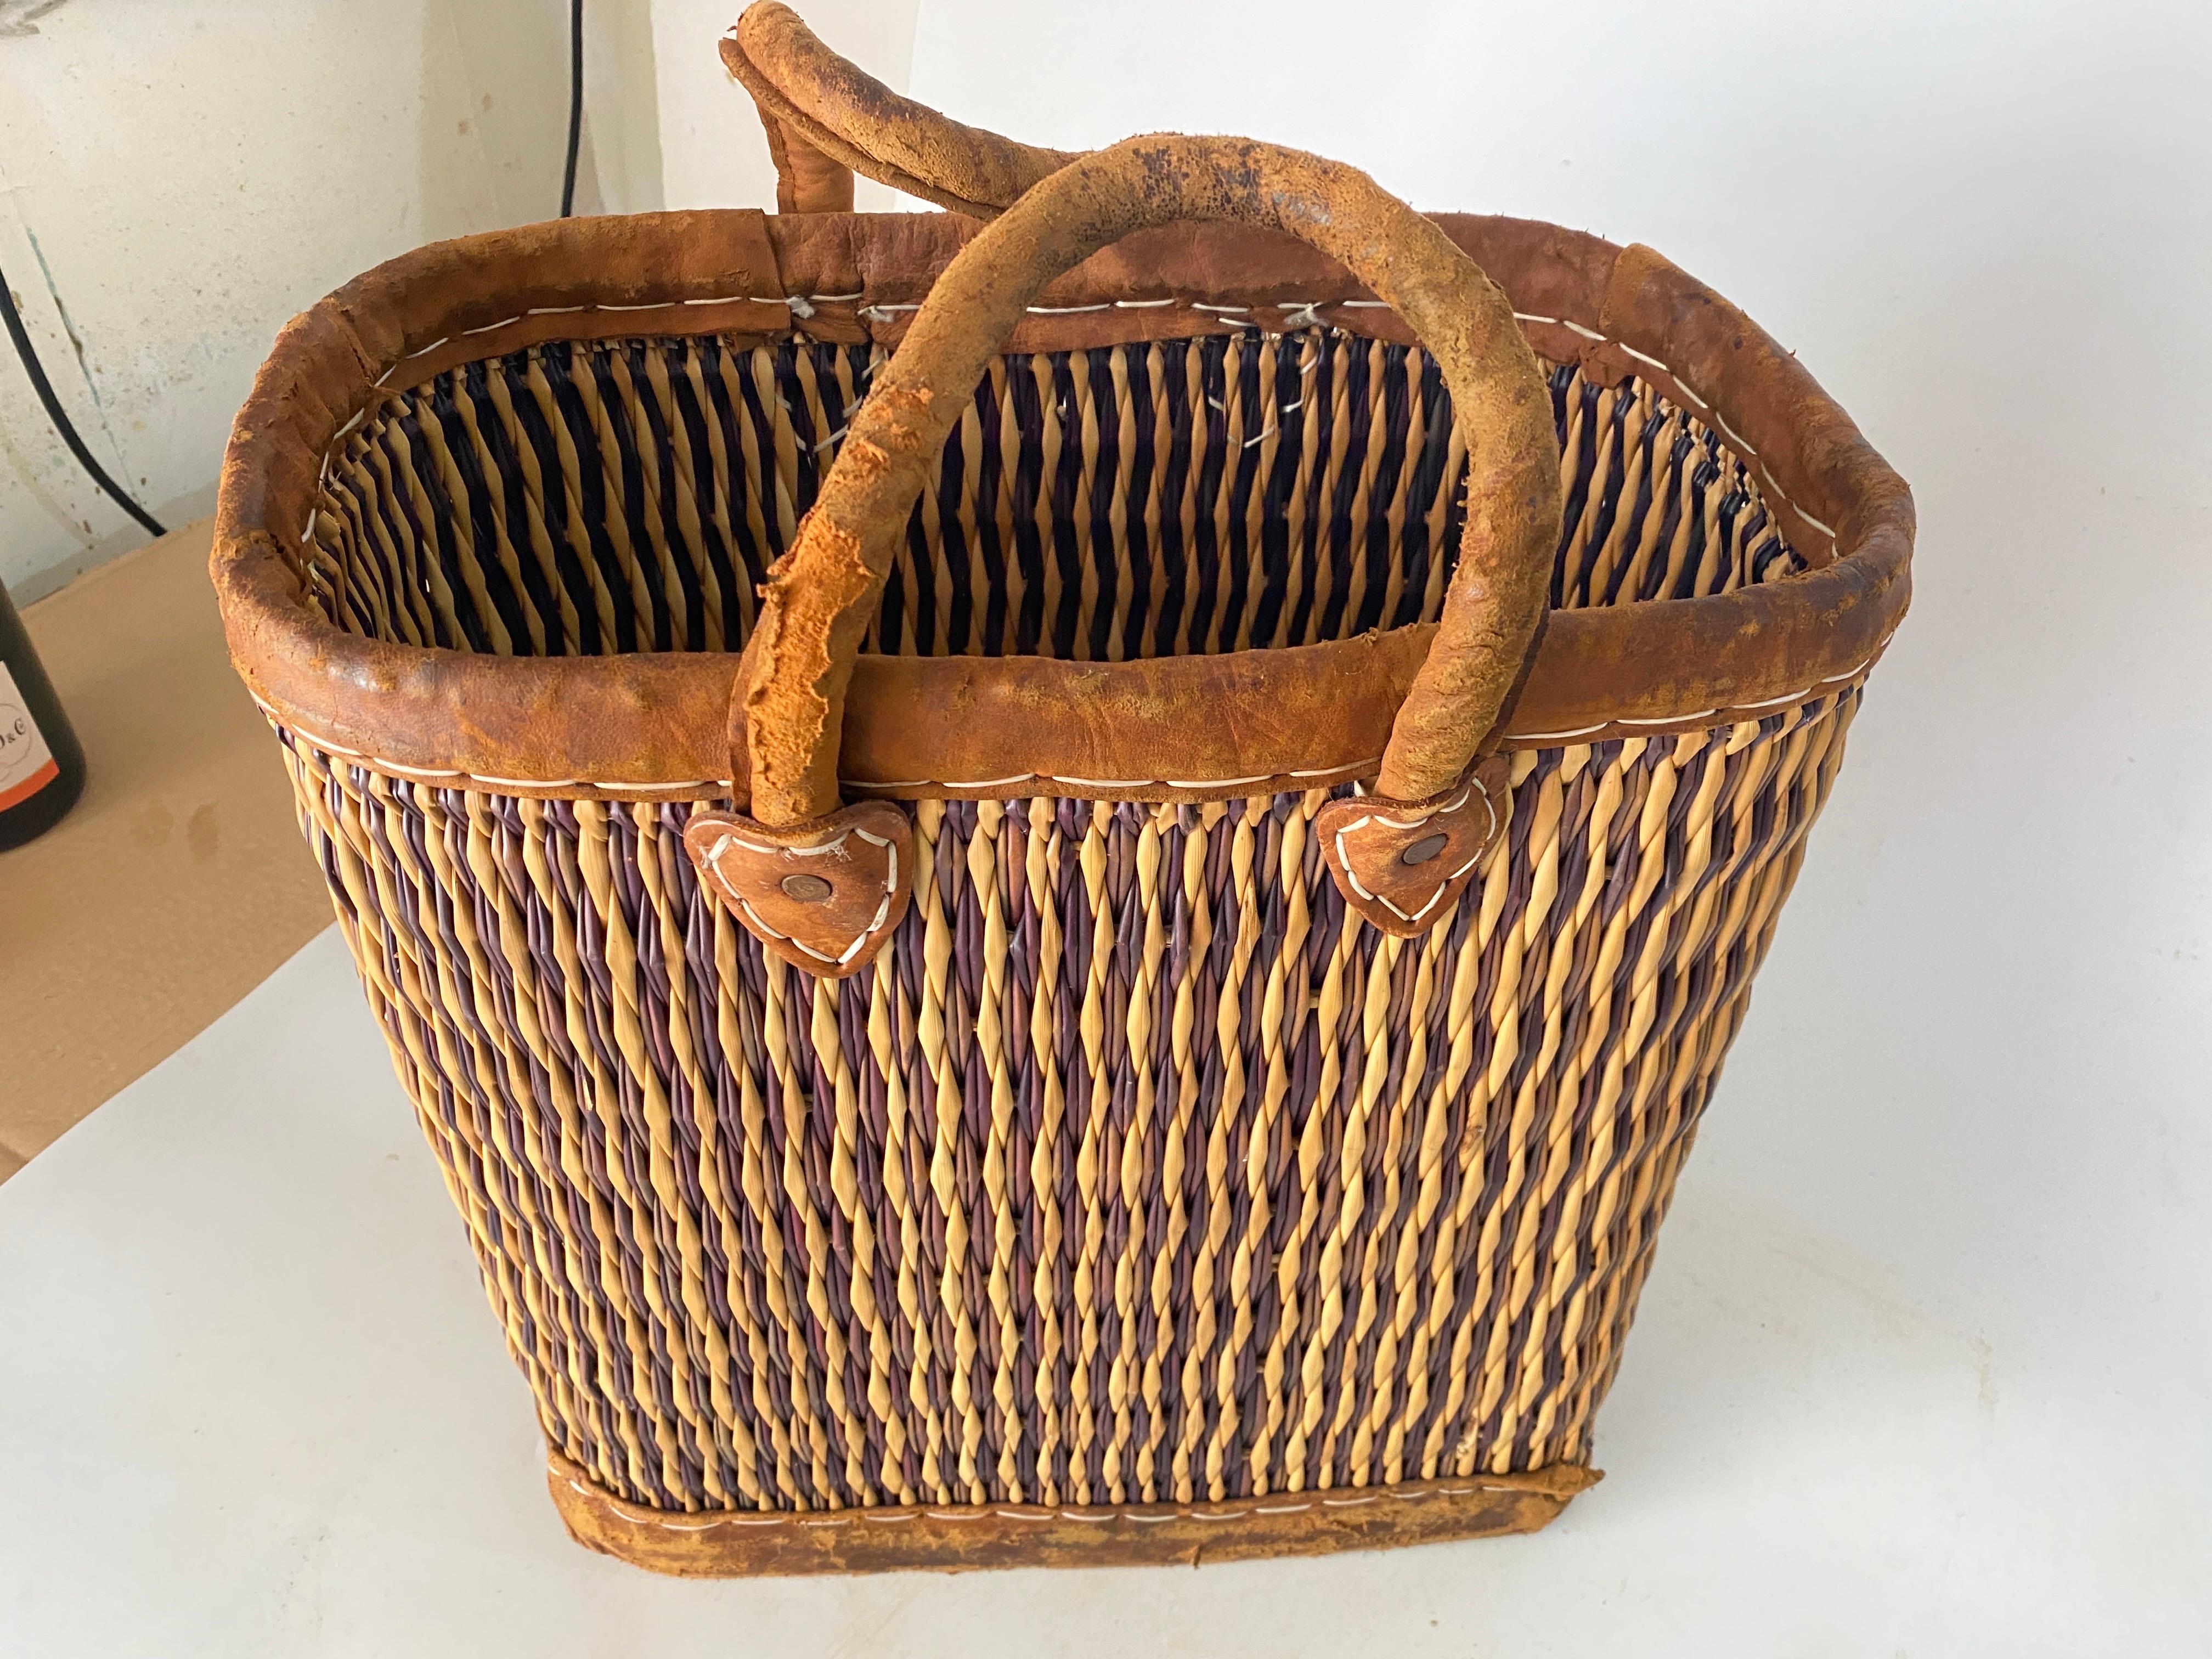 Vintage French Wicker Basket, Gold Color Stitched Leather Bag Handles France For Sale 26